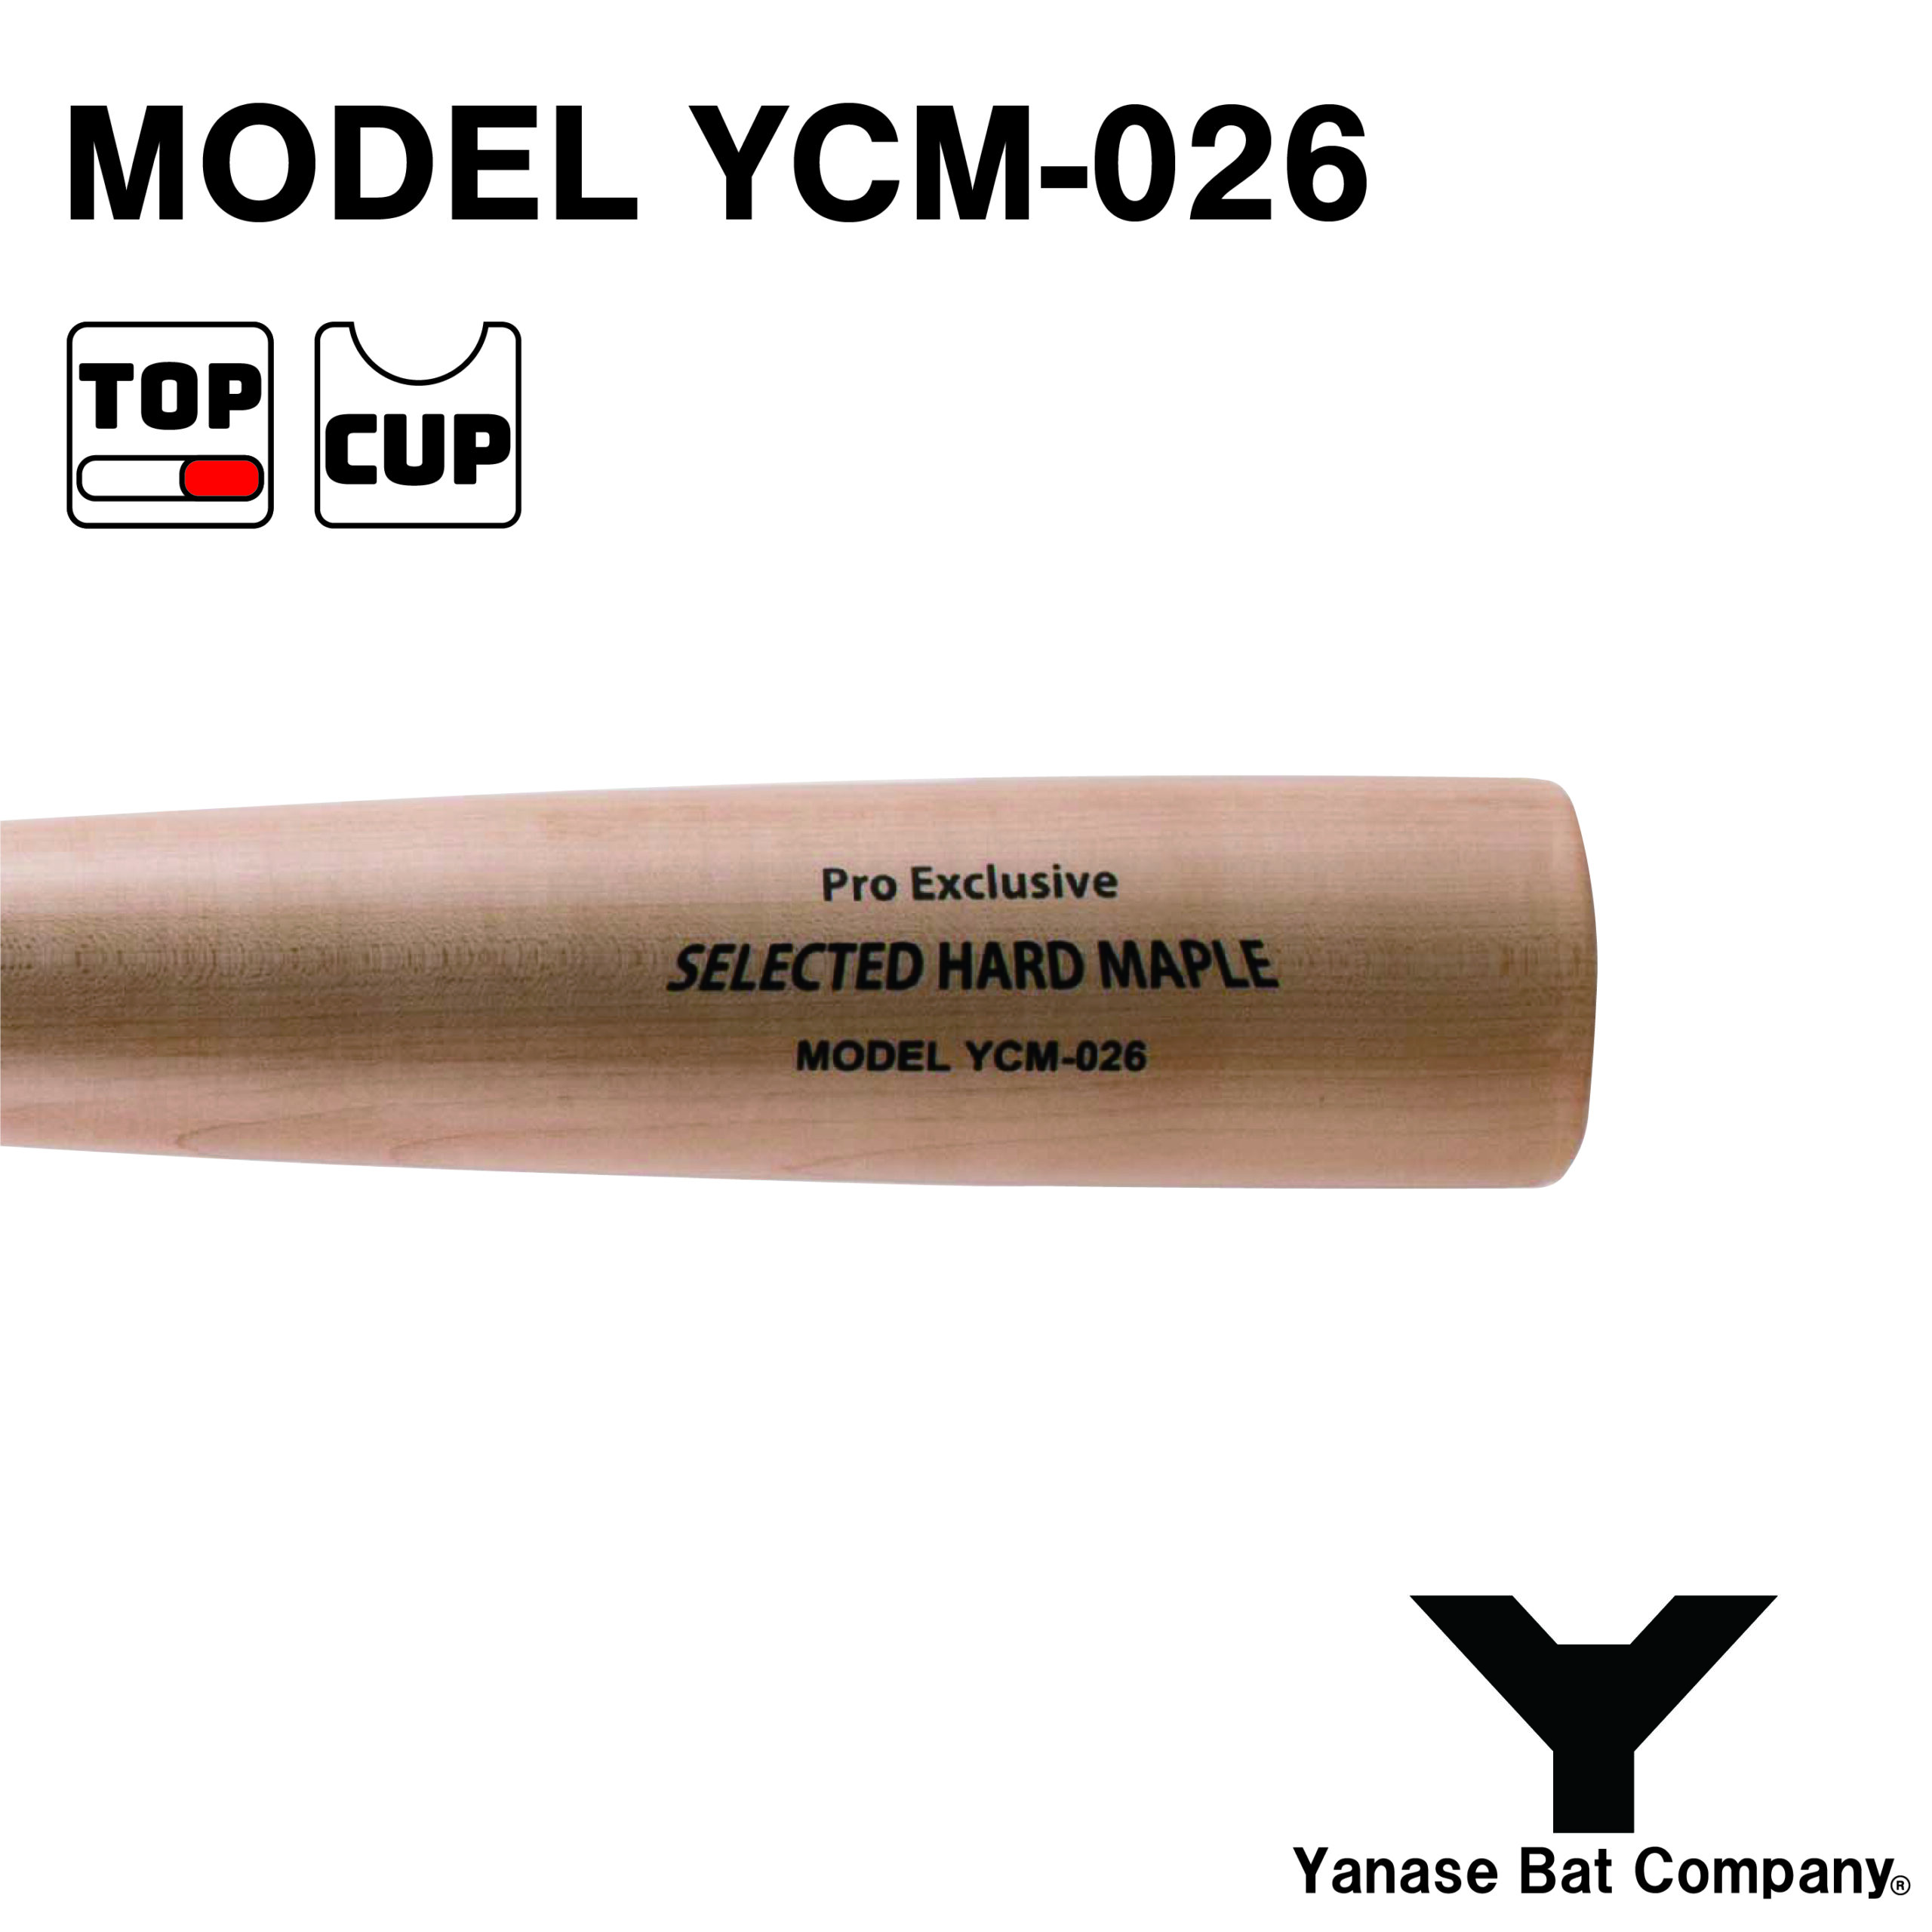 YCM-026 - YANASE BAT COMPANY